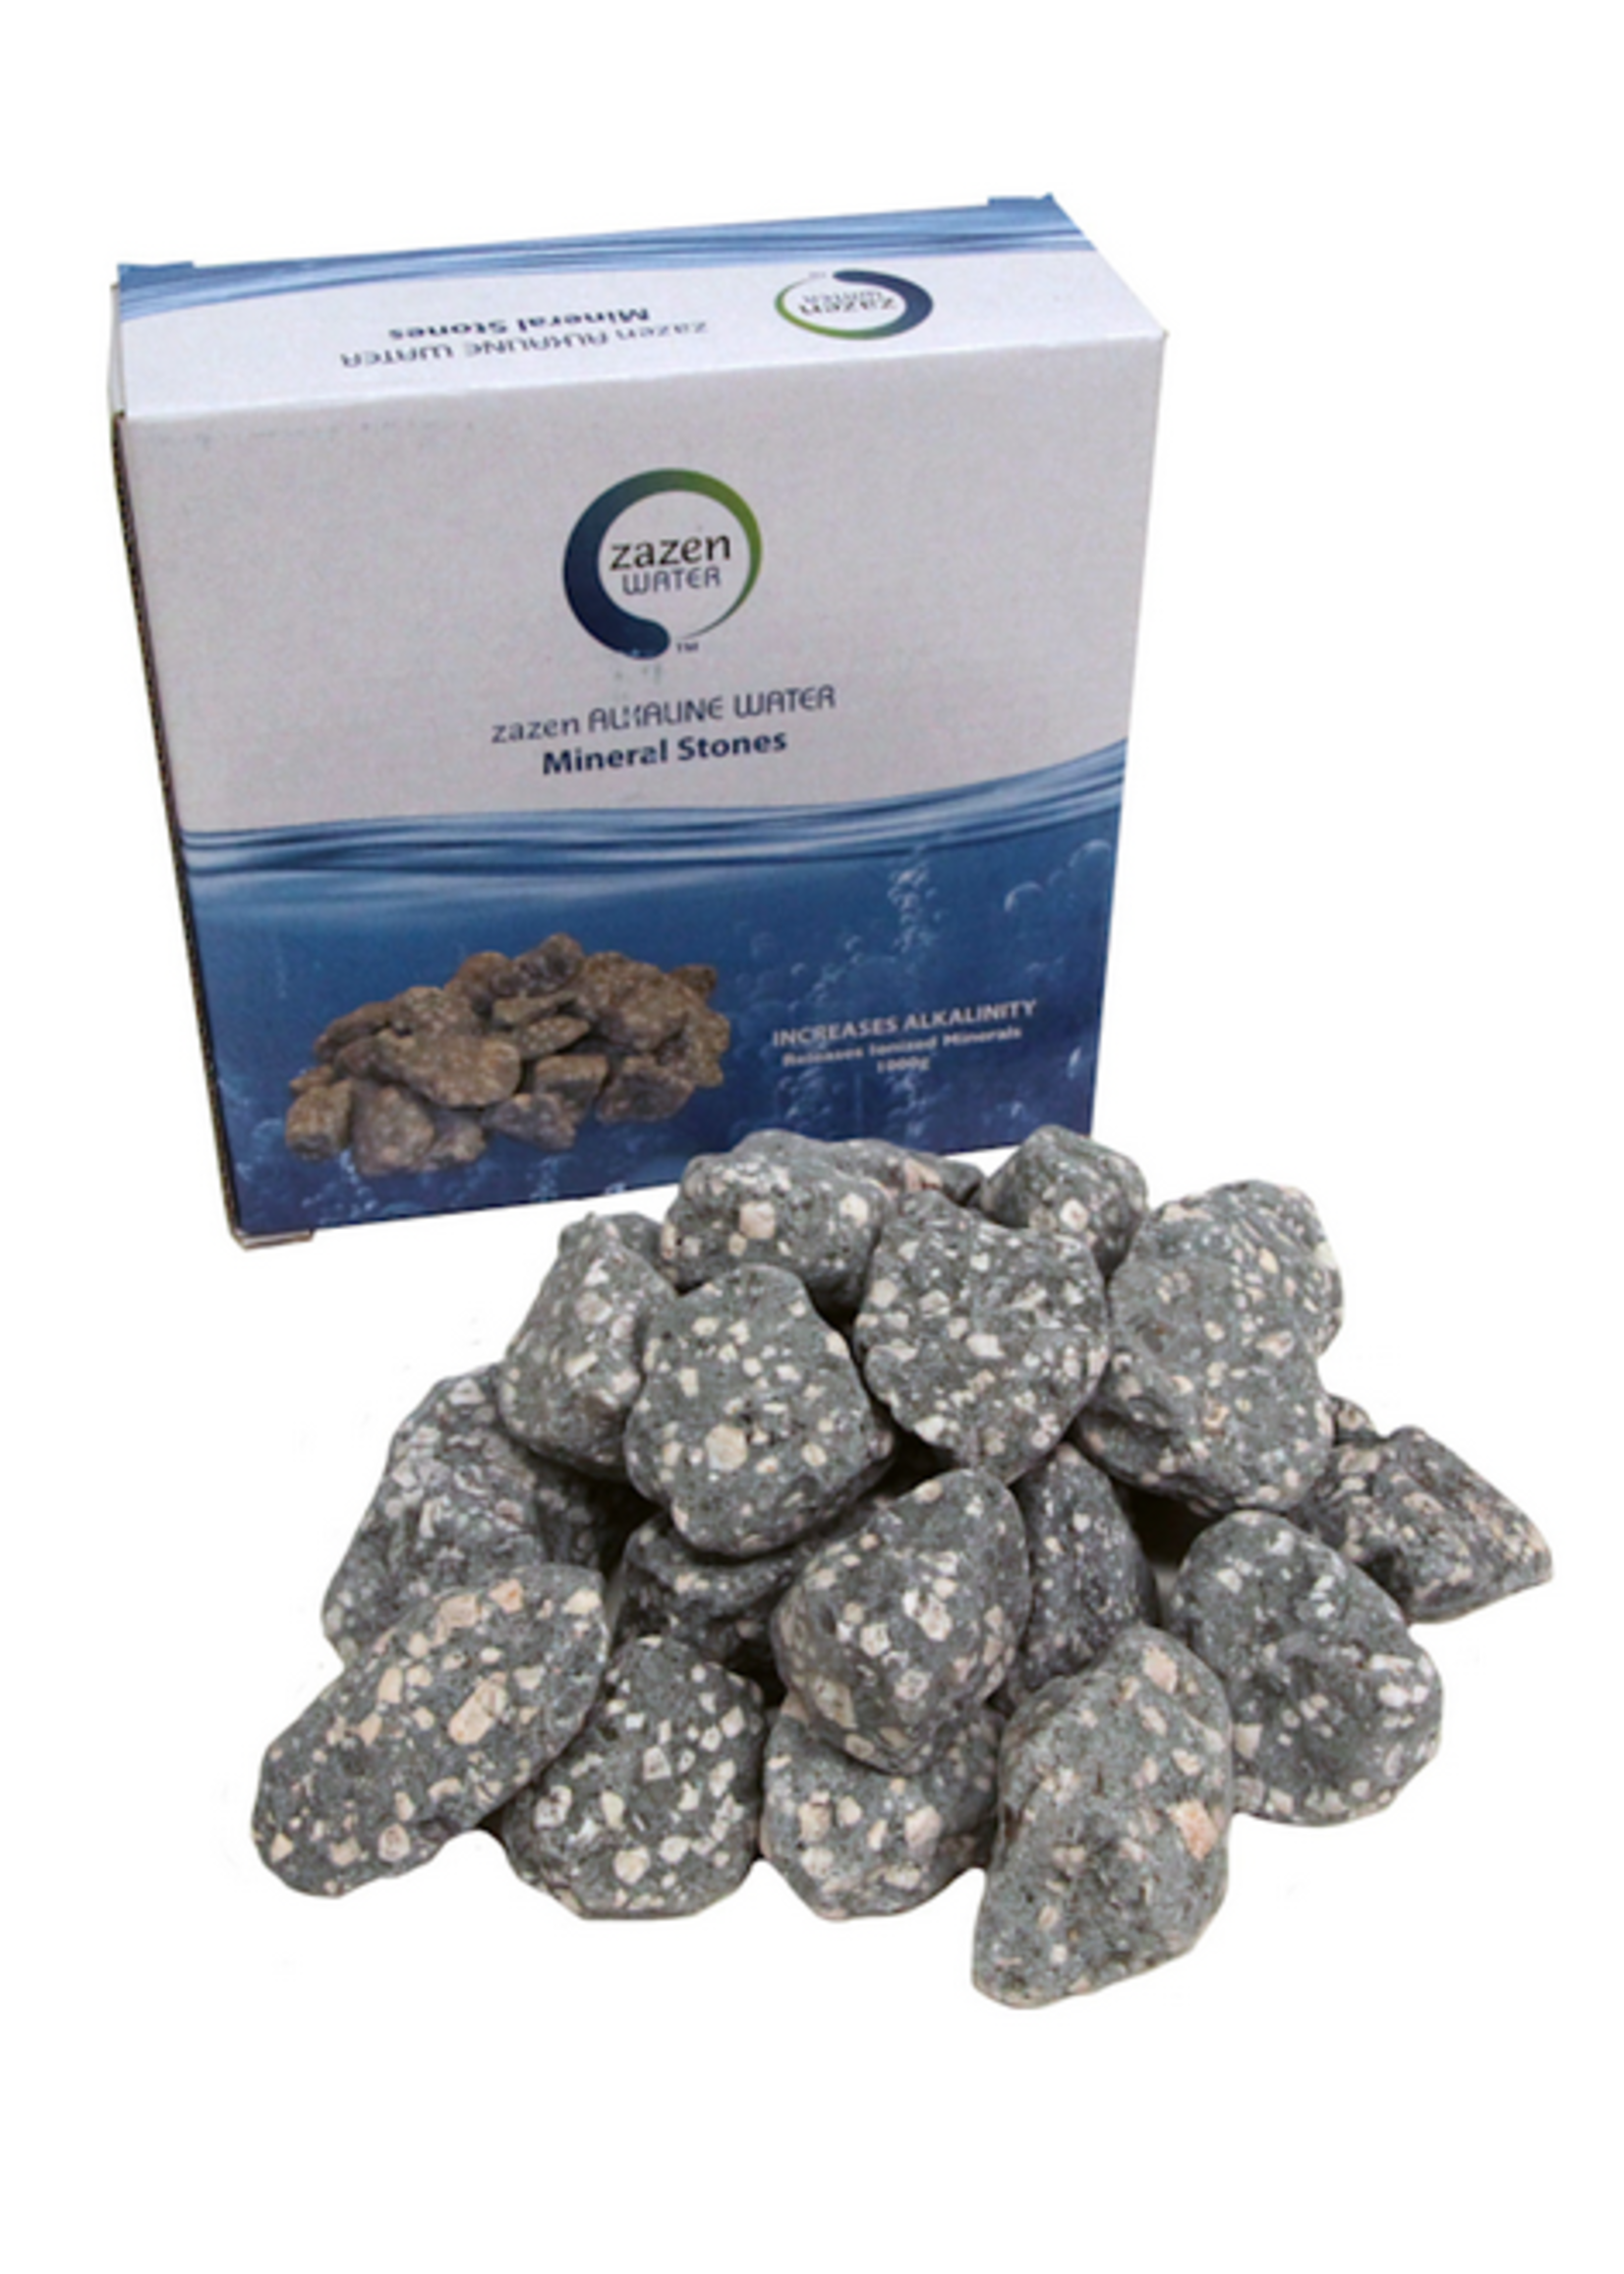 Zazen Zazen Alkaline Water Mineral Stones 1kg